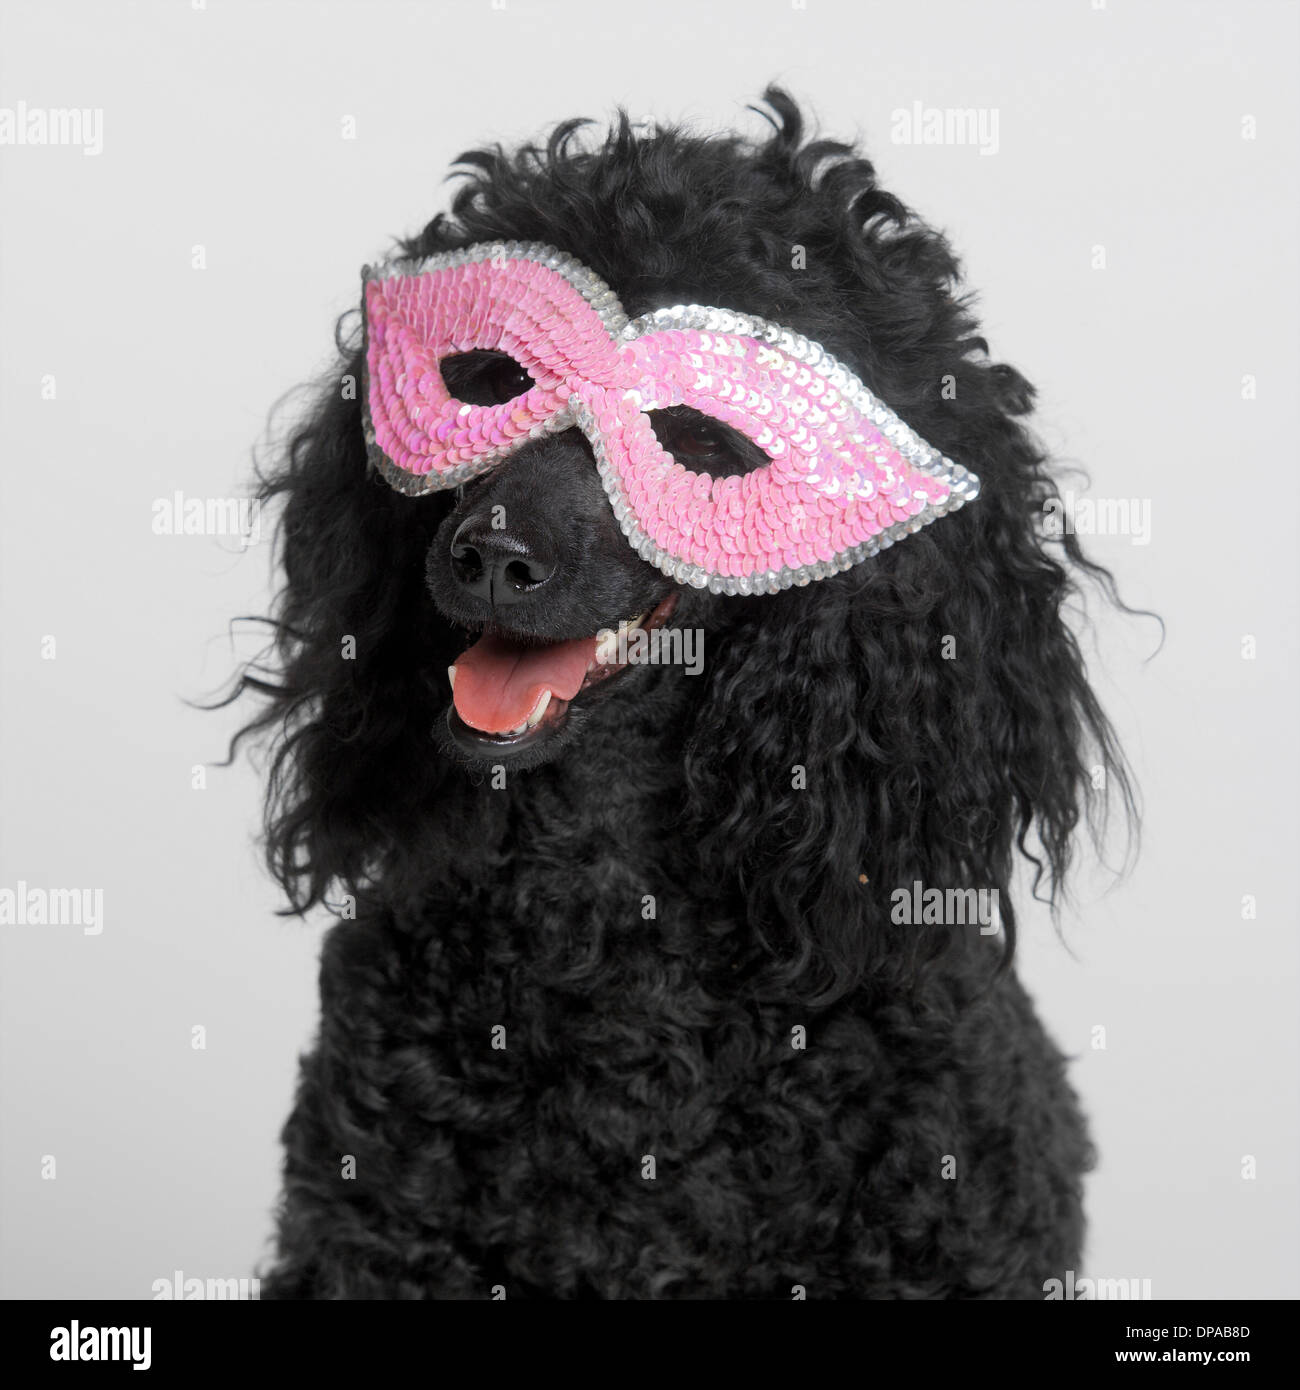 Black MIniature Poodle wearing pink mask Stock Photo